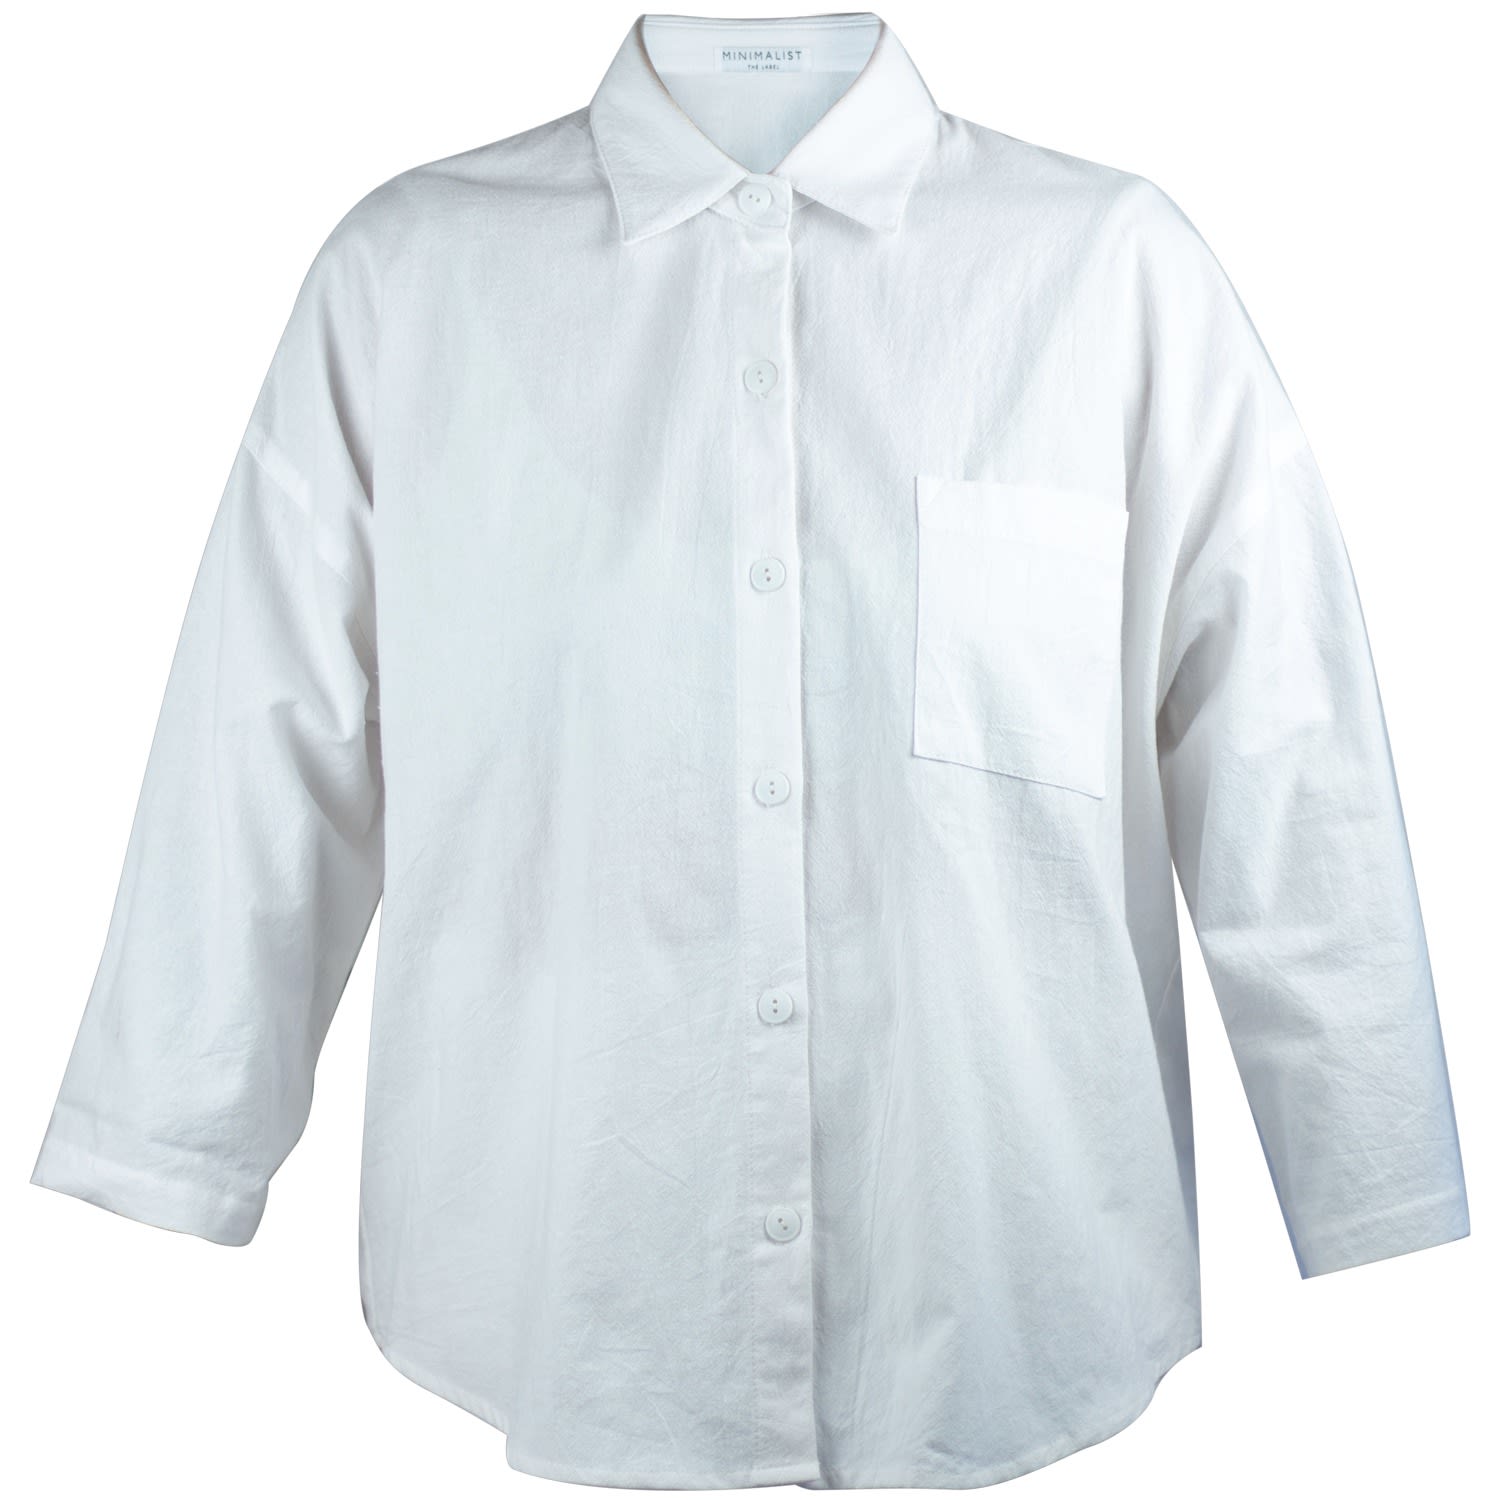 Women’s Drea Shirt White Large Minimalist the Label